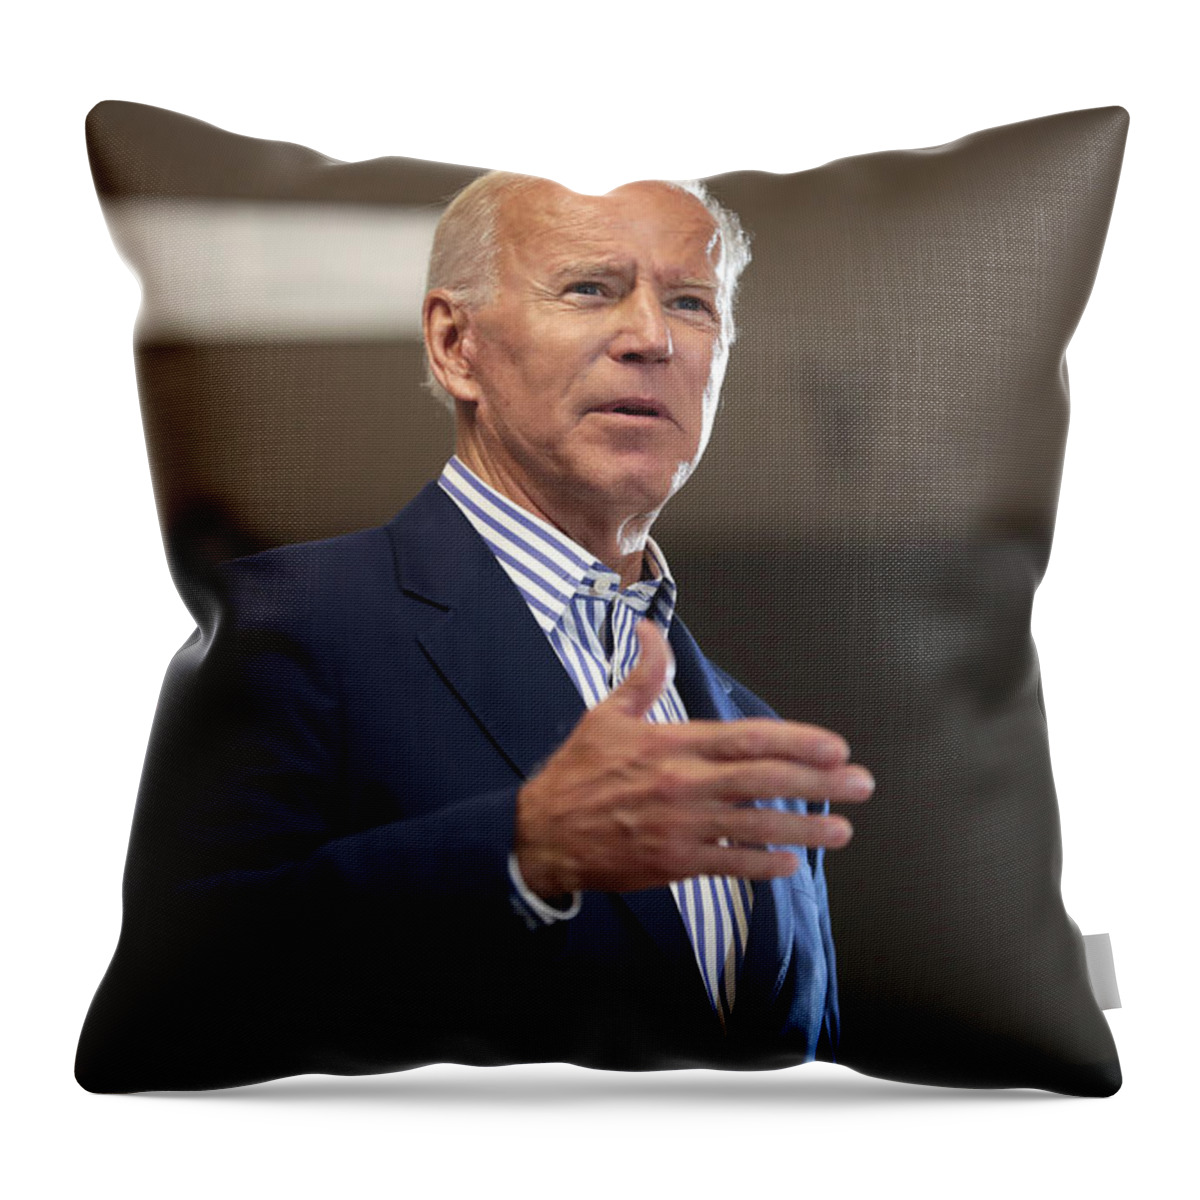 Portrait Of President Joe Biden By Gage Skidmore Throw Pillow featuring the digital art Portrait of President Joe Biden by Gage Skidmore #28 by Celestial Images